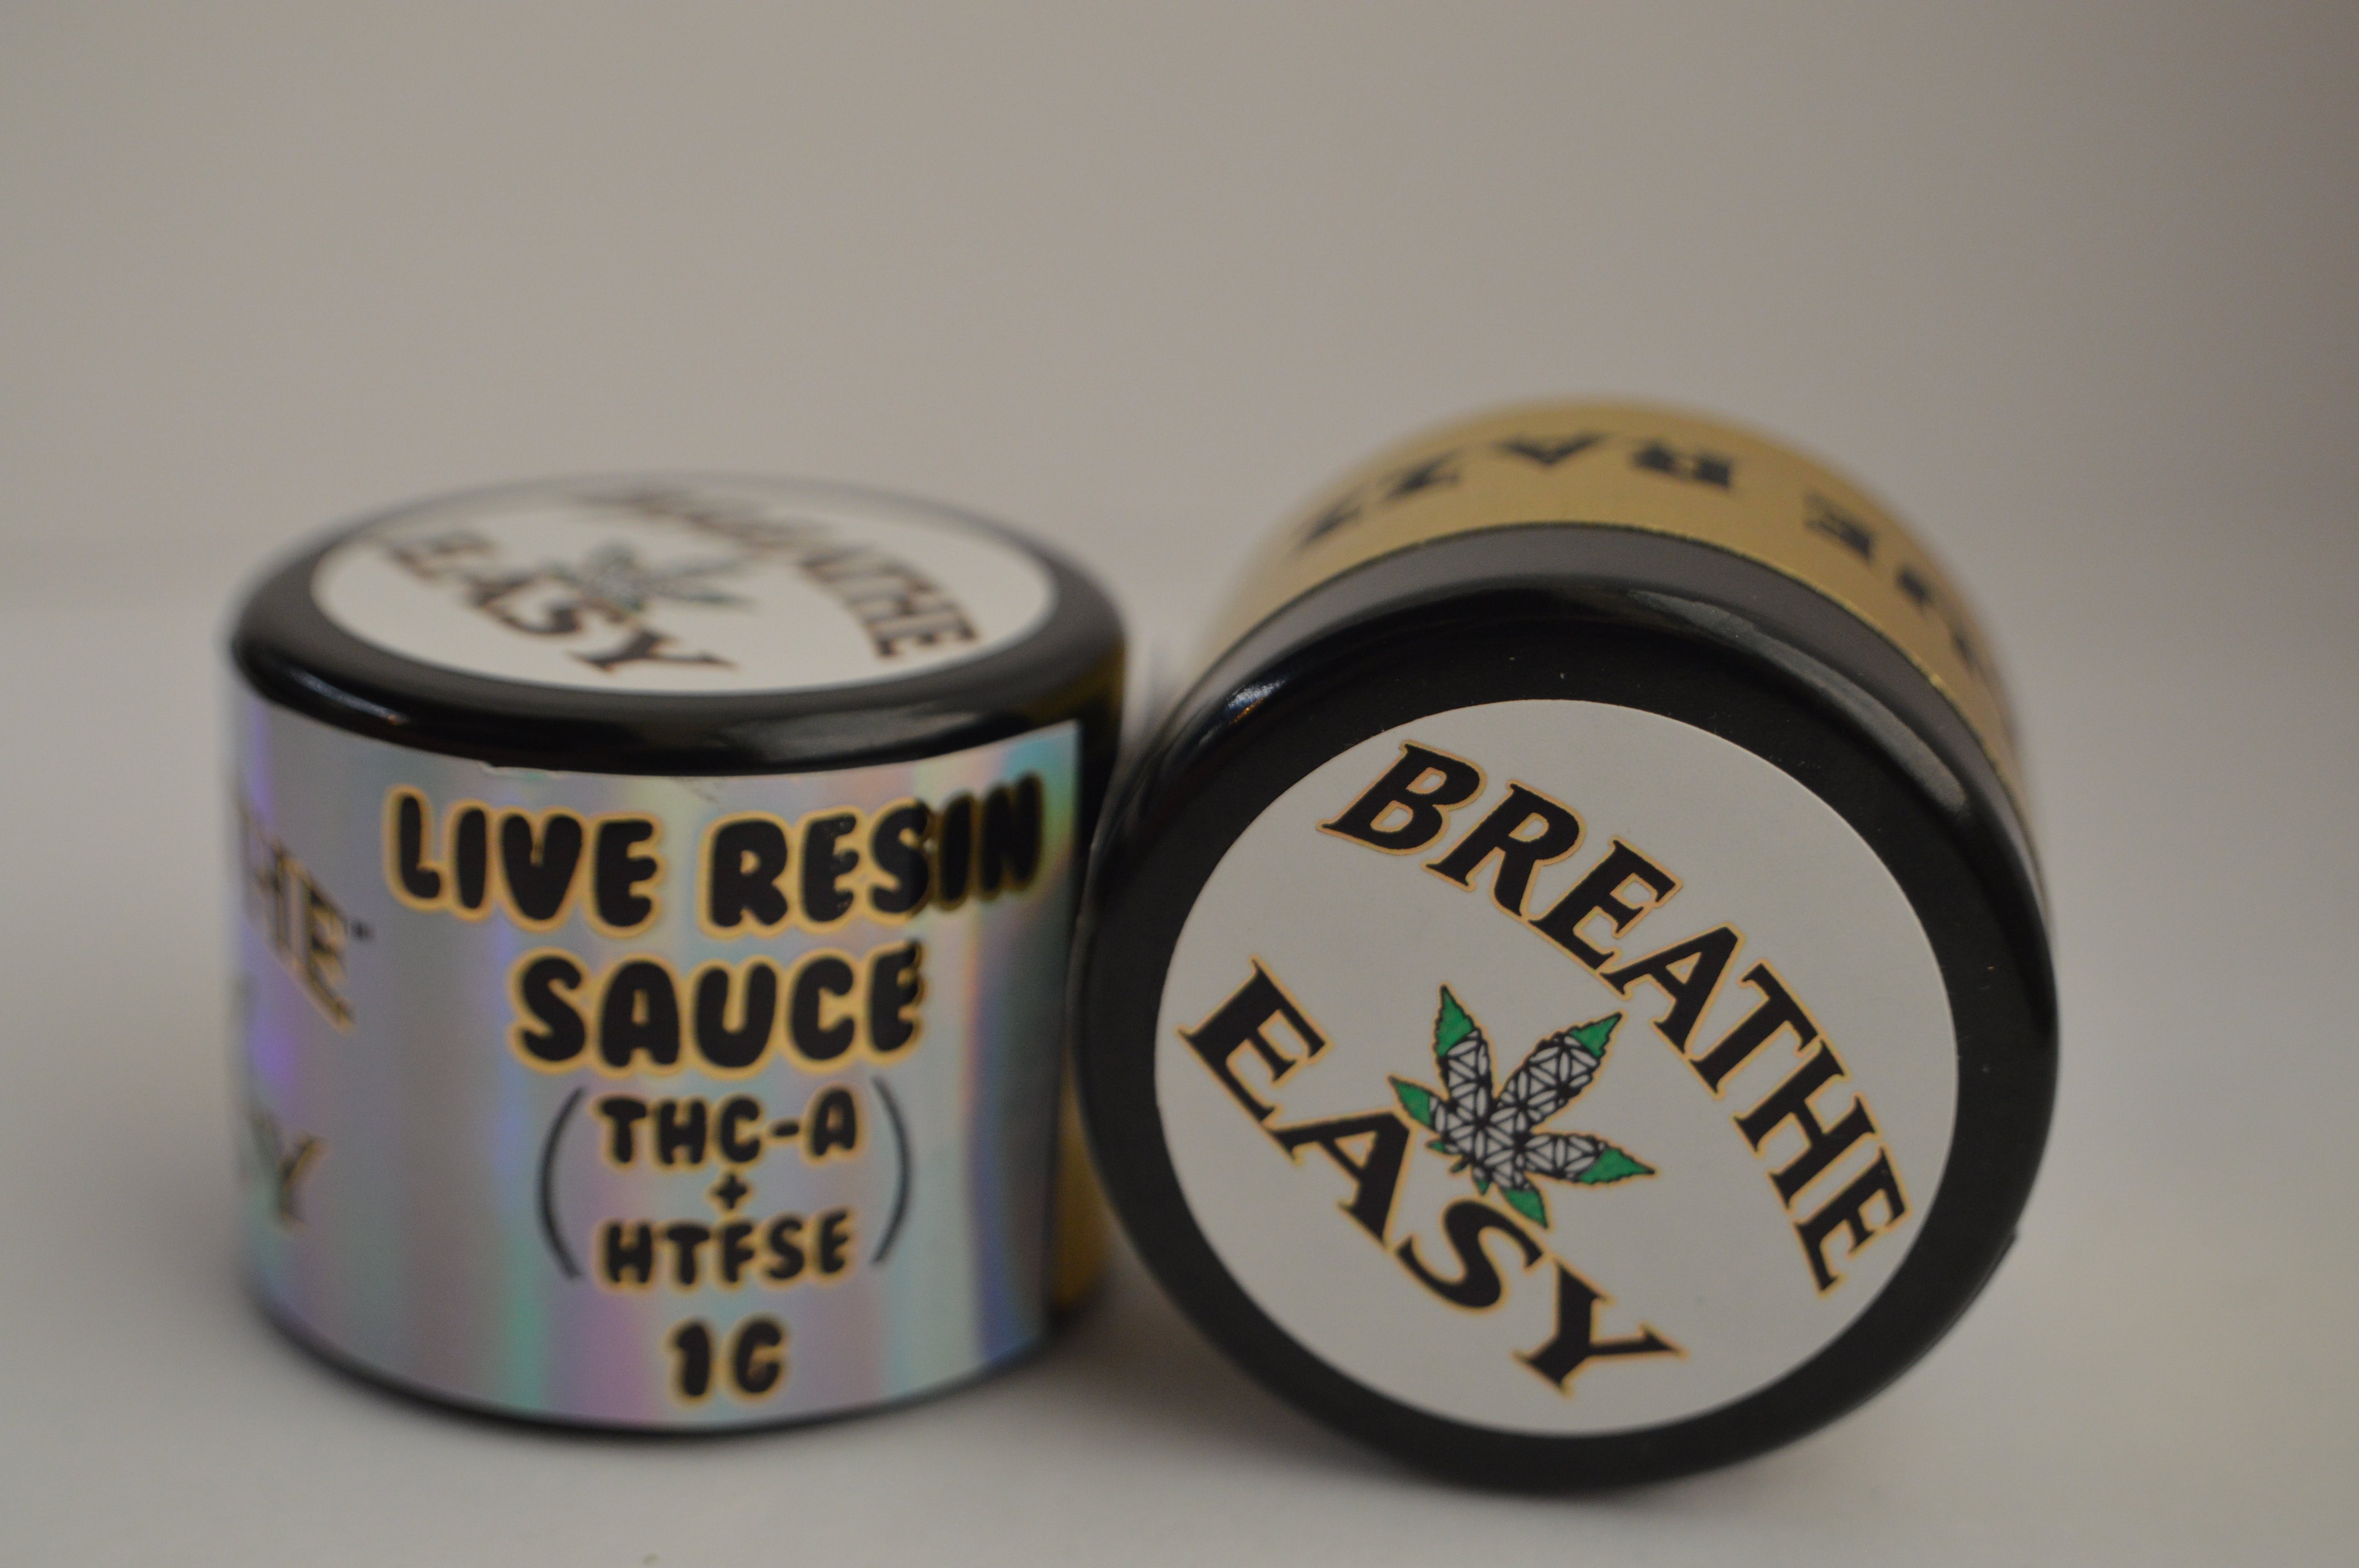 wax-breathe-easy-htfse-sauce-jedi-kush